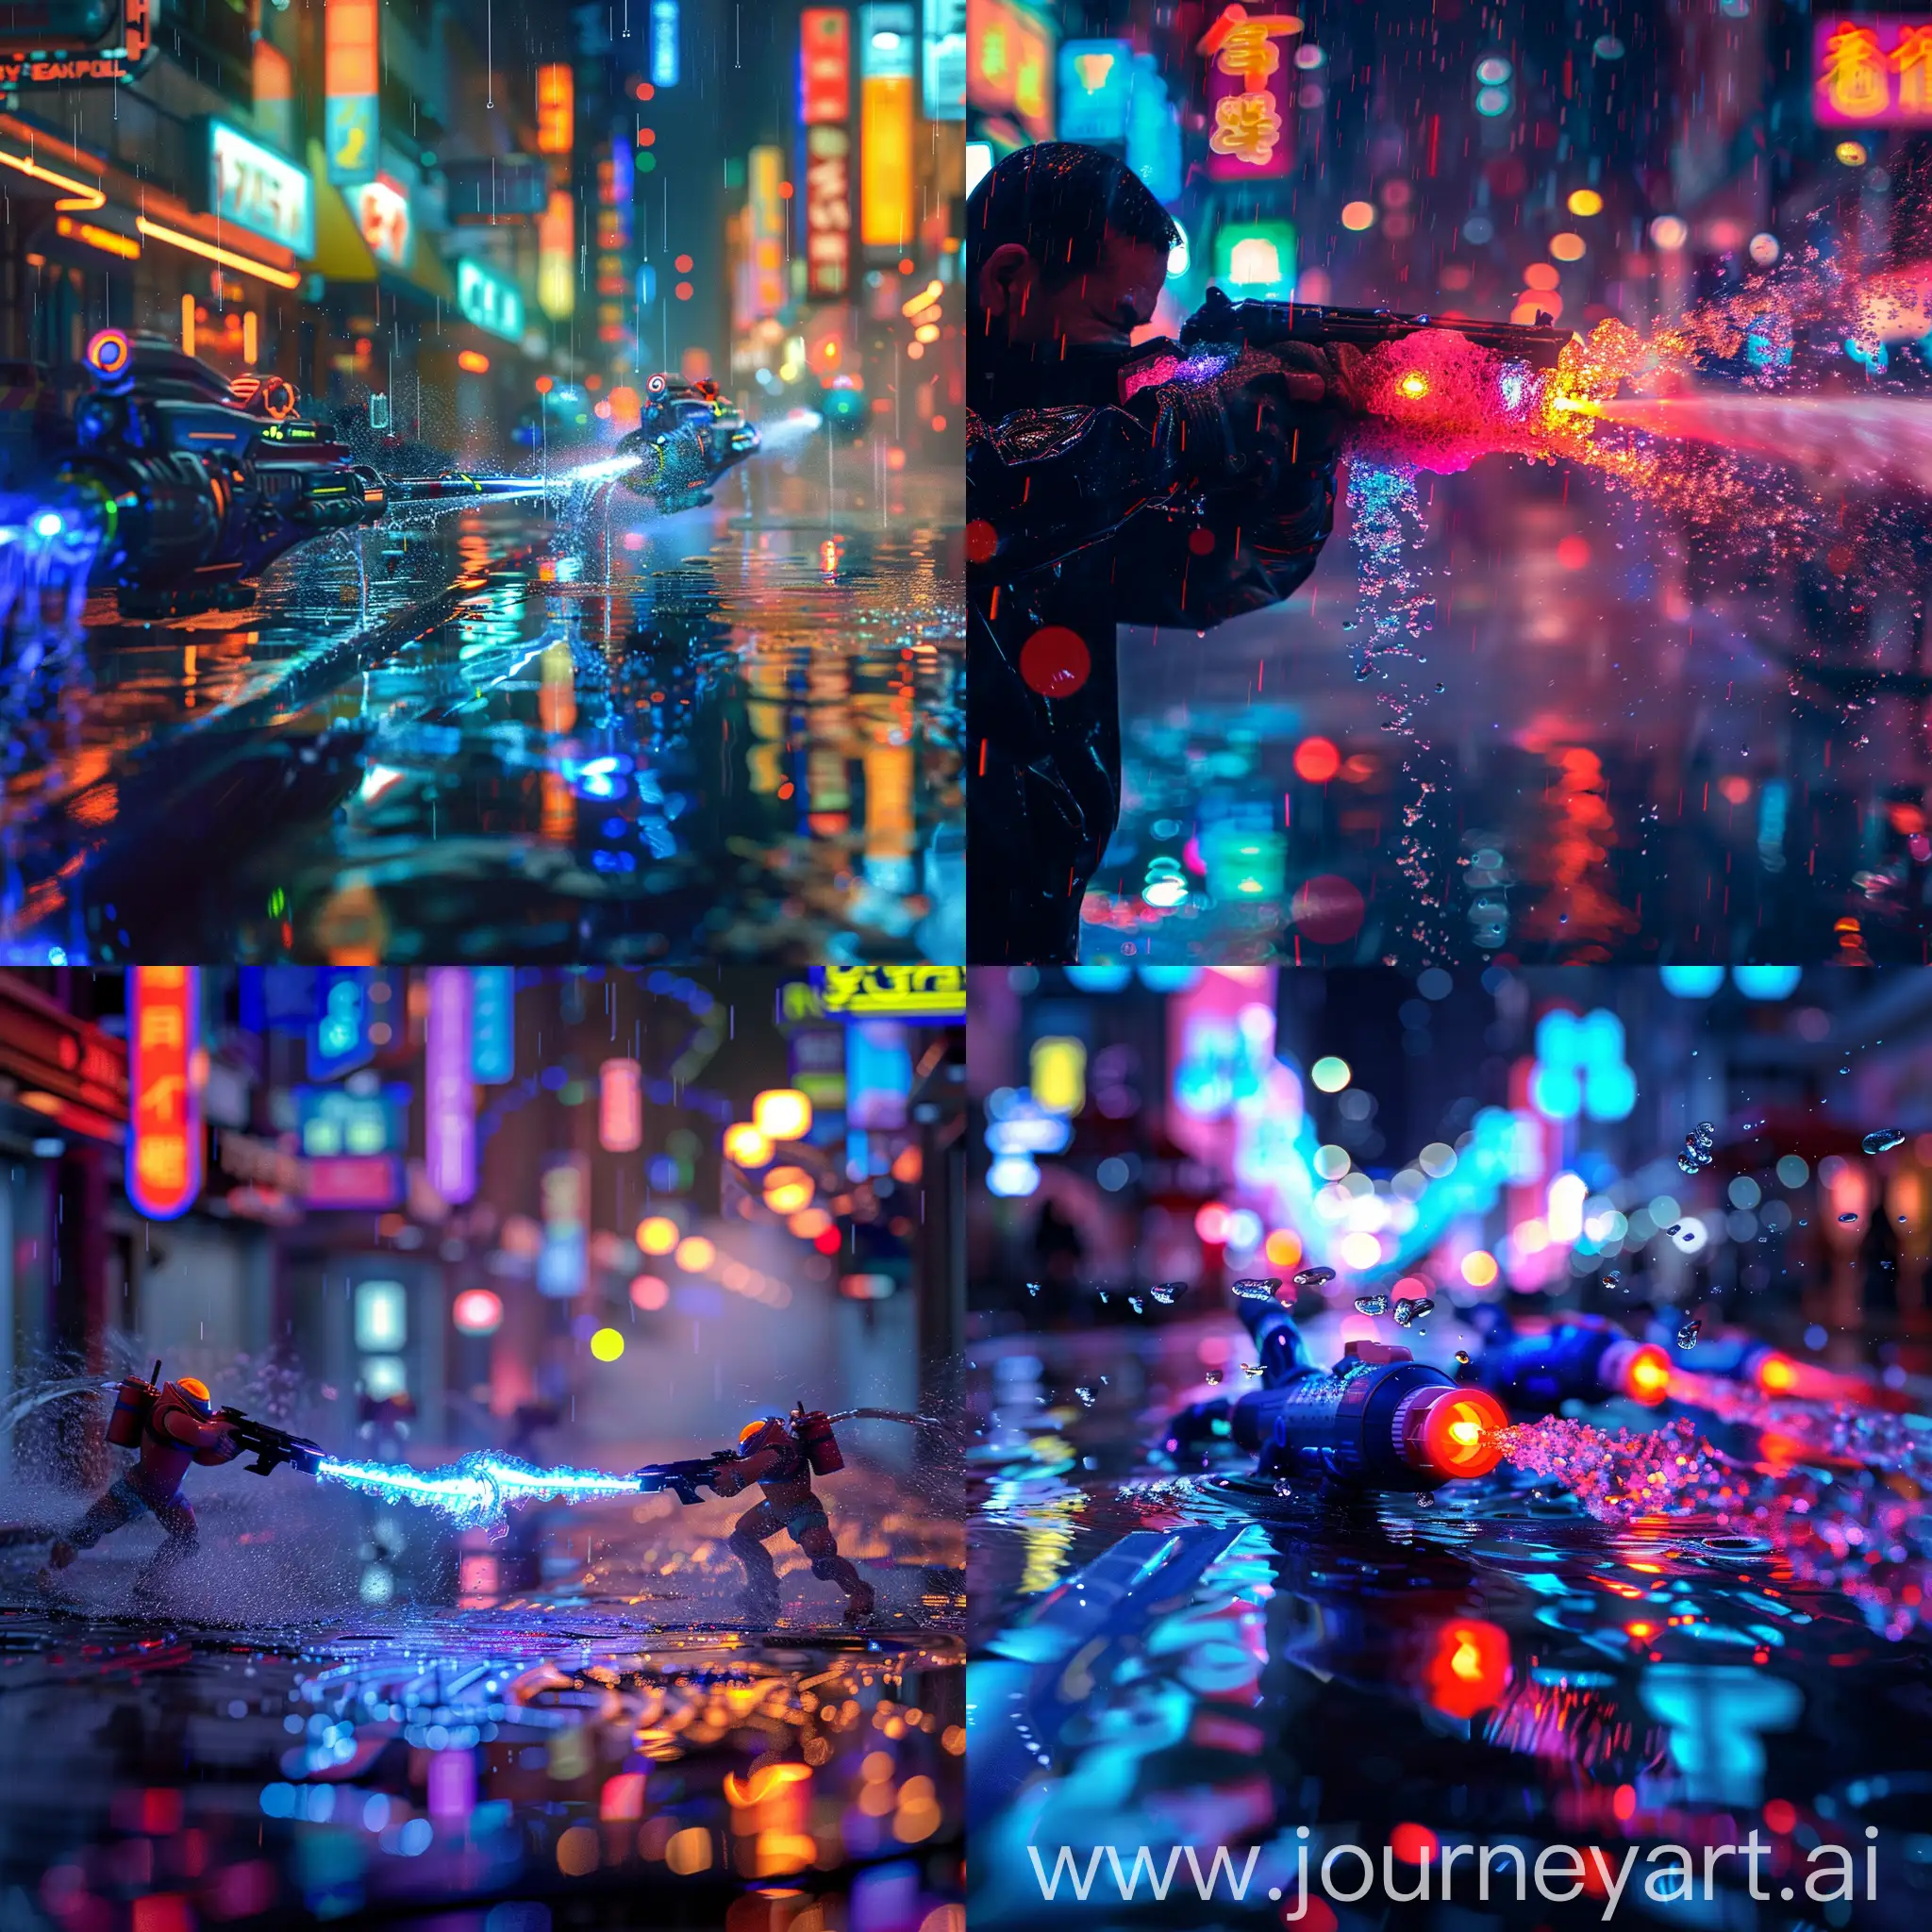 battle with water blasters in dark neon cyberpunk style blur